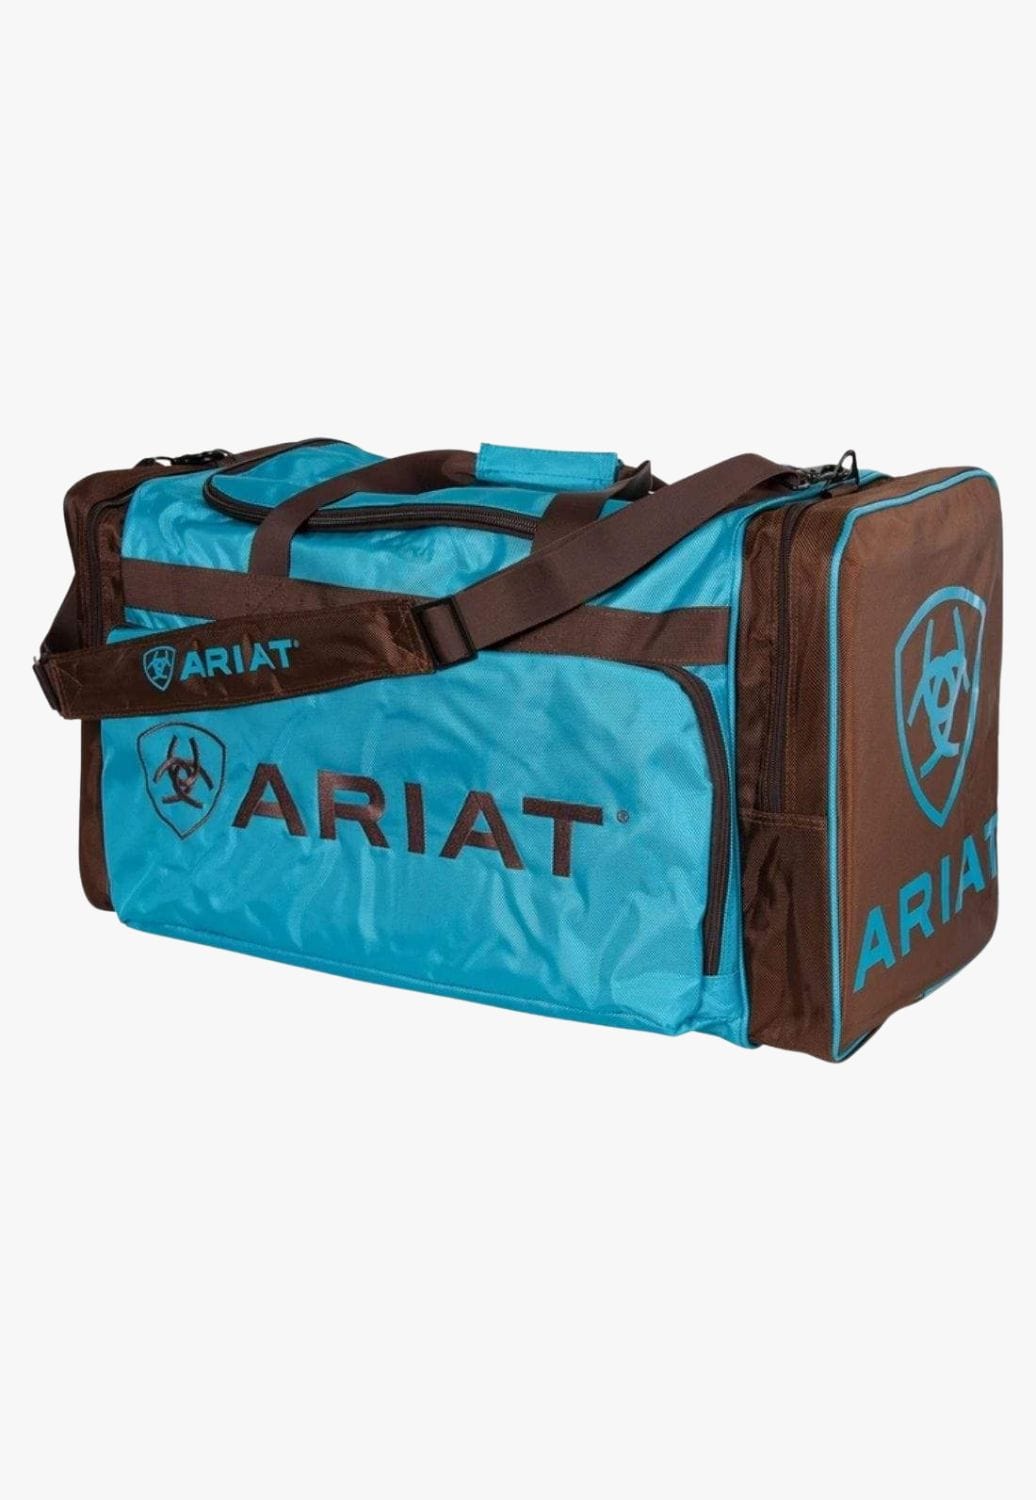 Ariat TRAVEL - Travel Bags Turquoise/Brown Ariat Junior Gear Bag